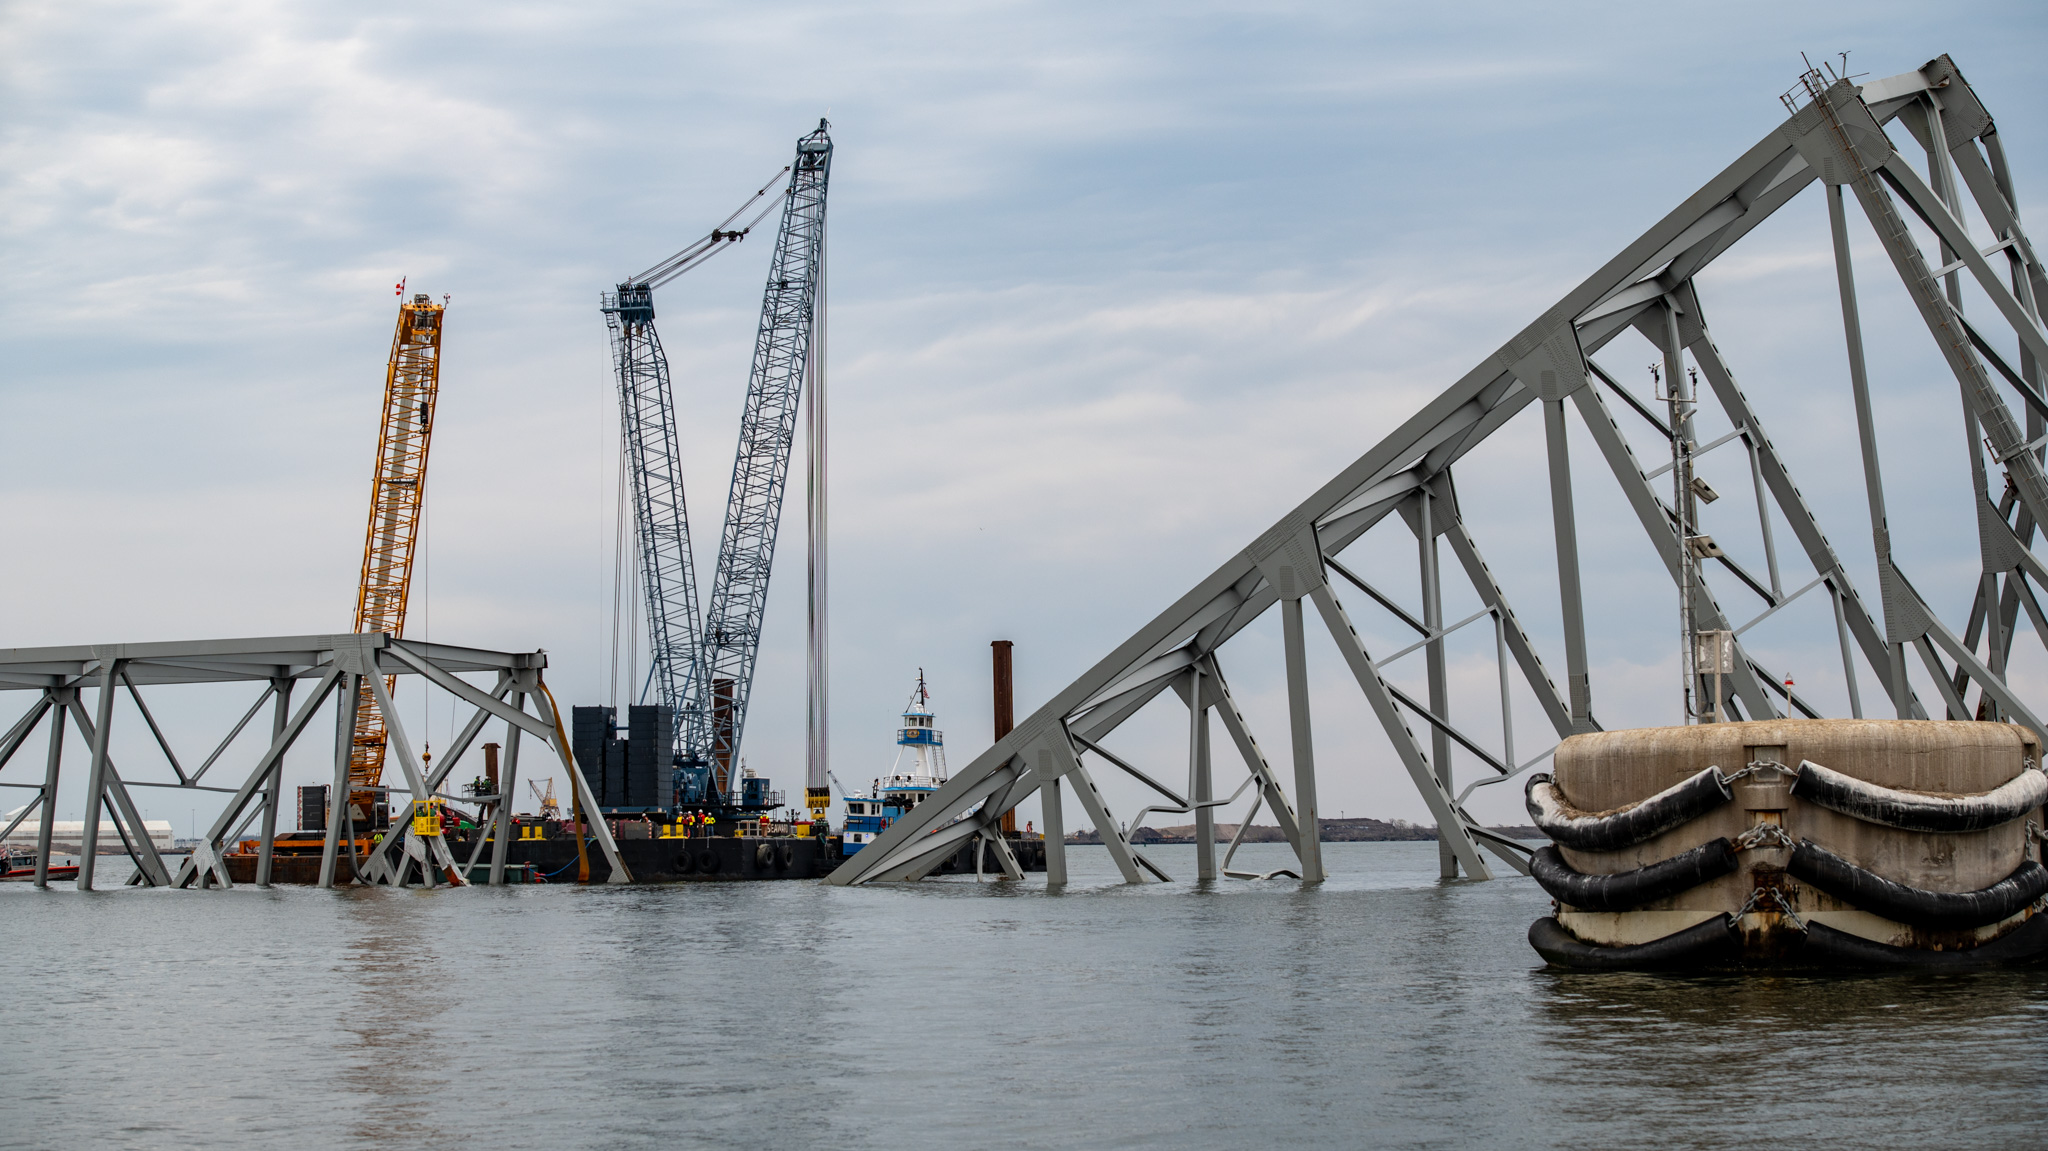 Baltimore Key Bridge collapse: bridge wreckage removal commenced